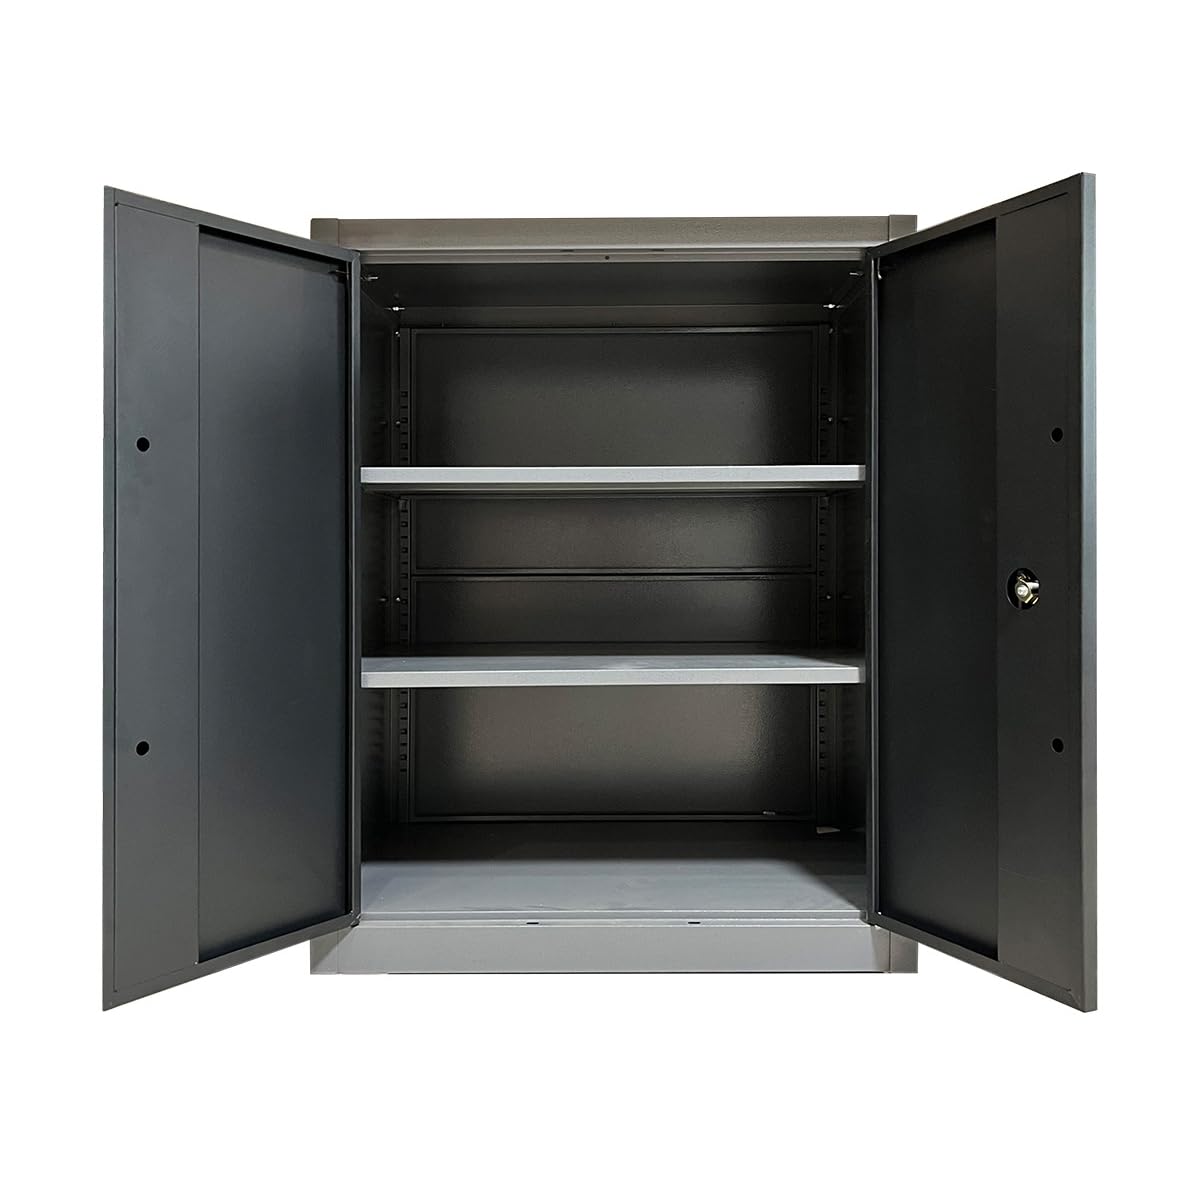 JZD Metal Tool Storage Cabinet with Lockable Doors and 2 Adjustable Shelves, for Office, Garage, Black & Grey